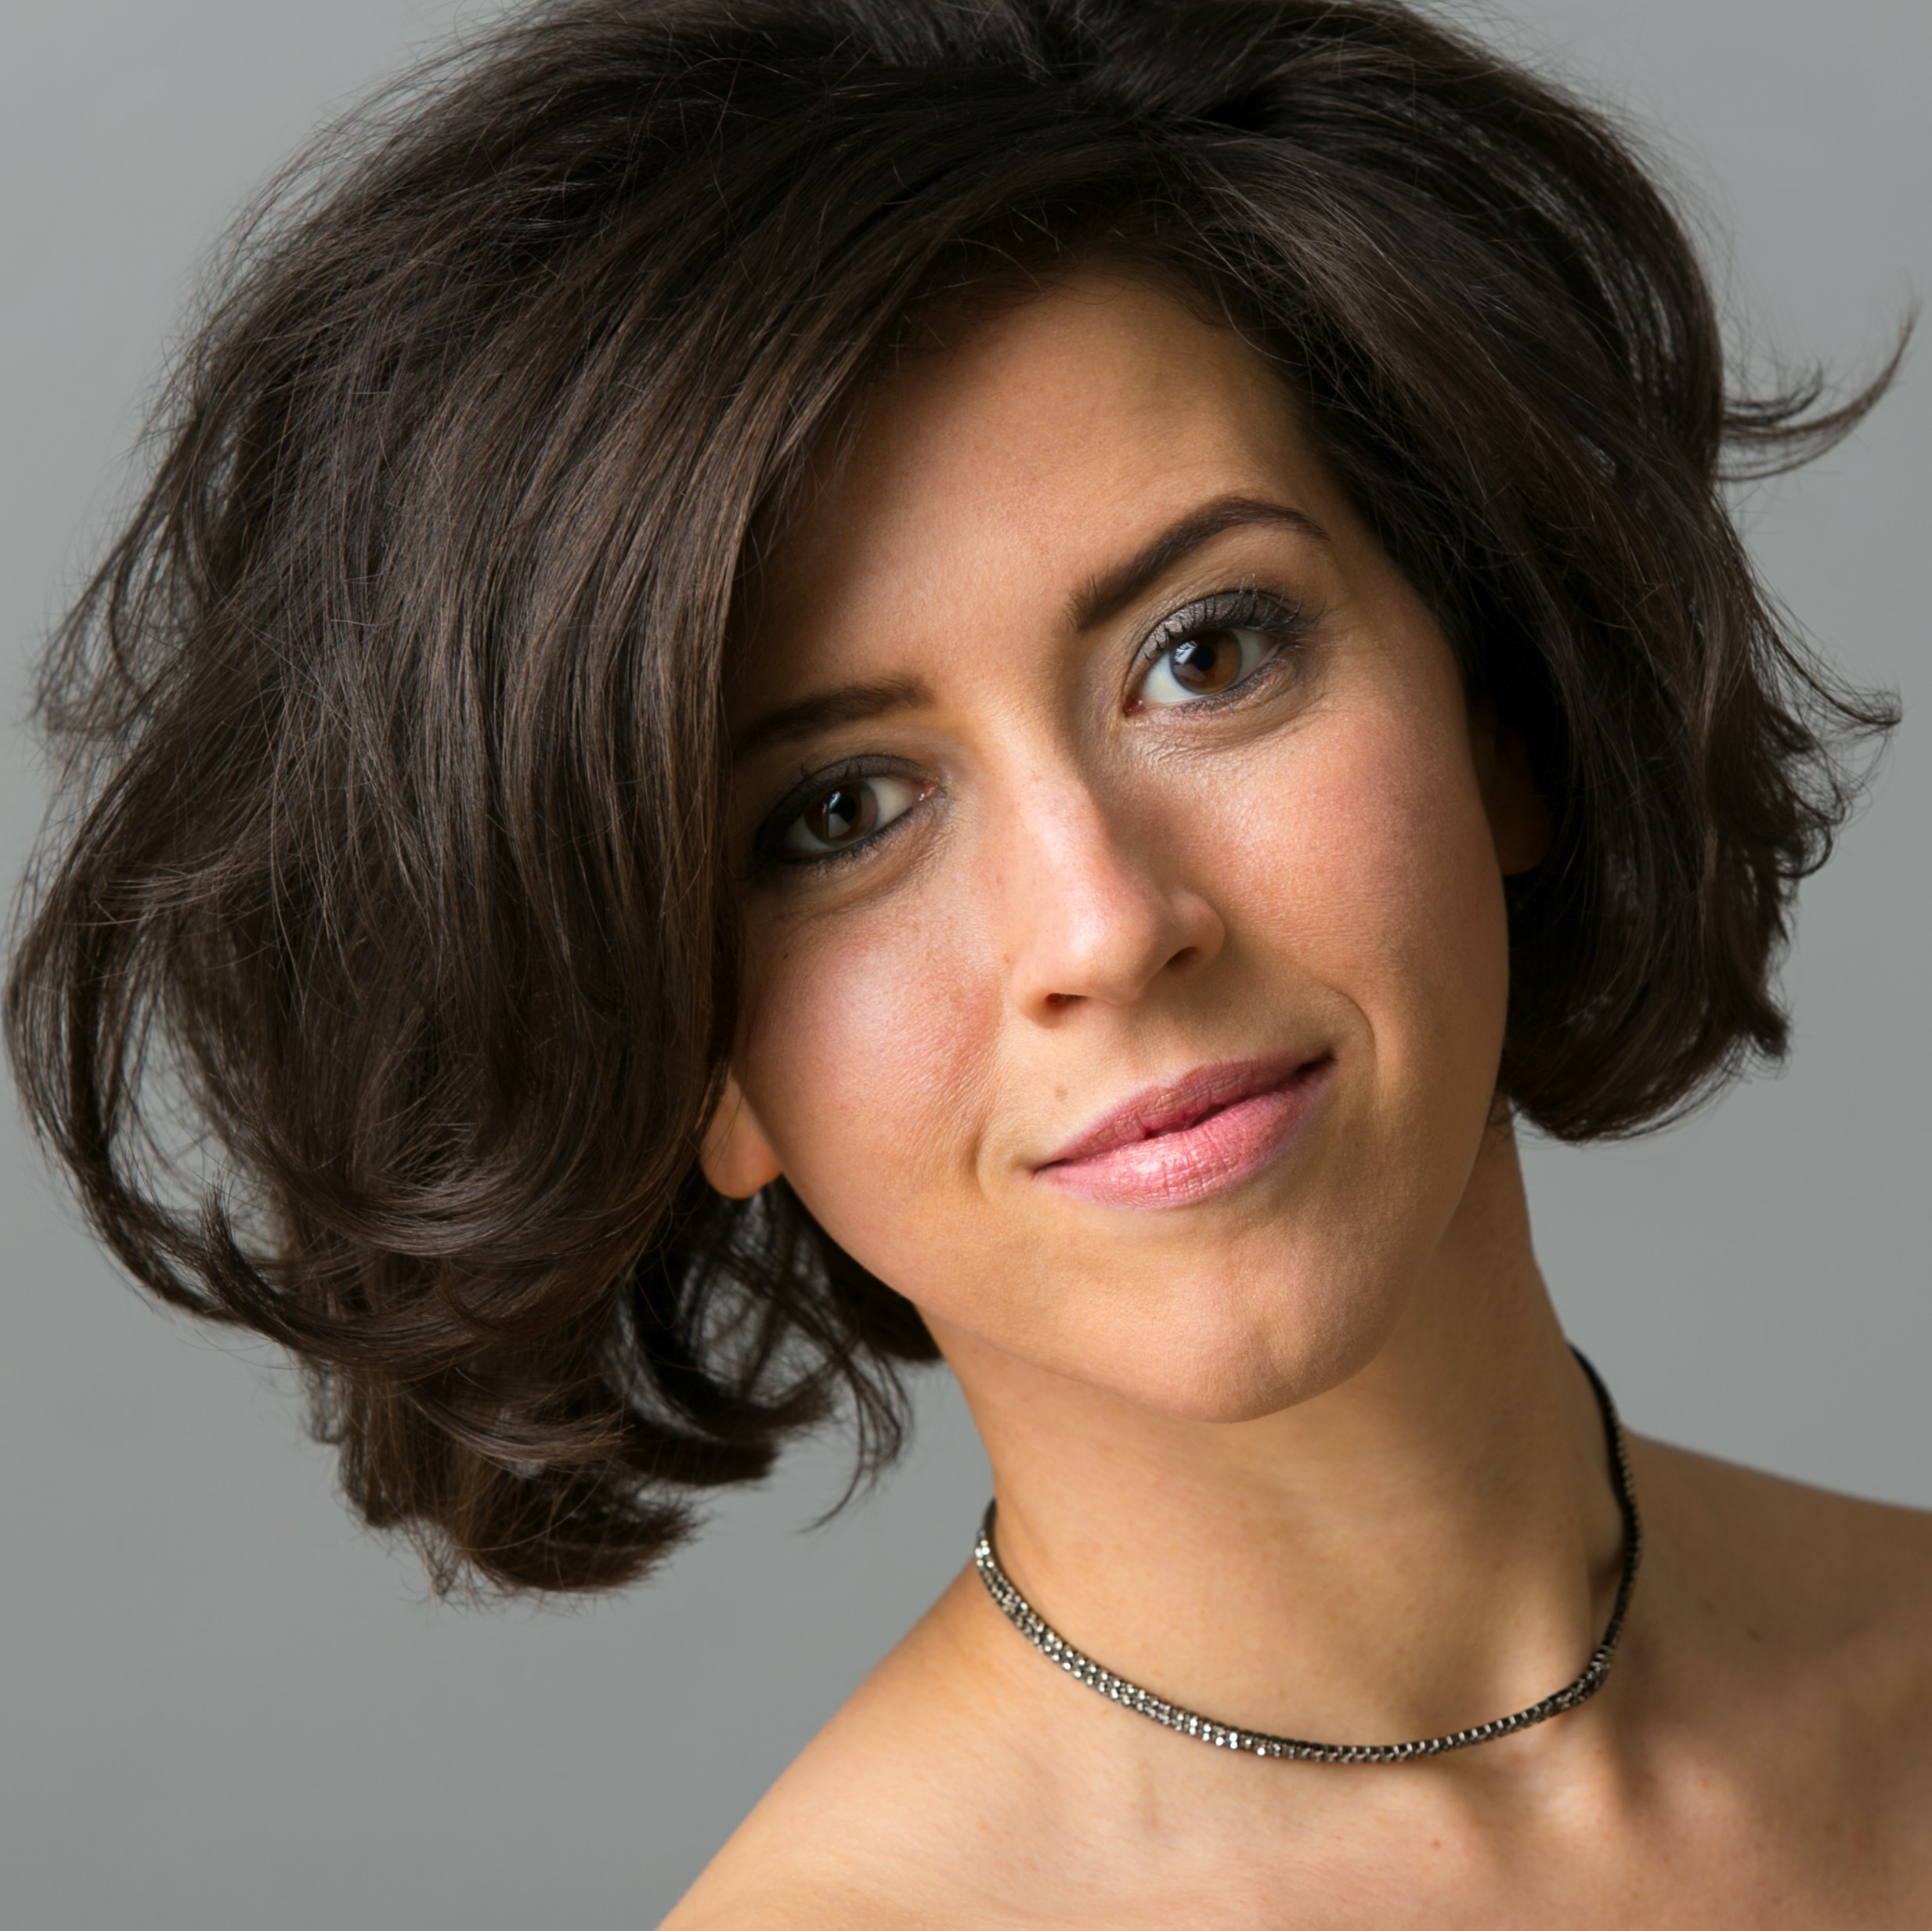 Headshot of Lisette Oropesa